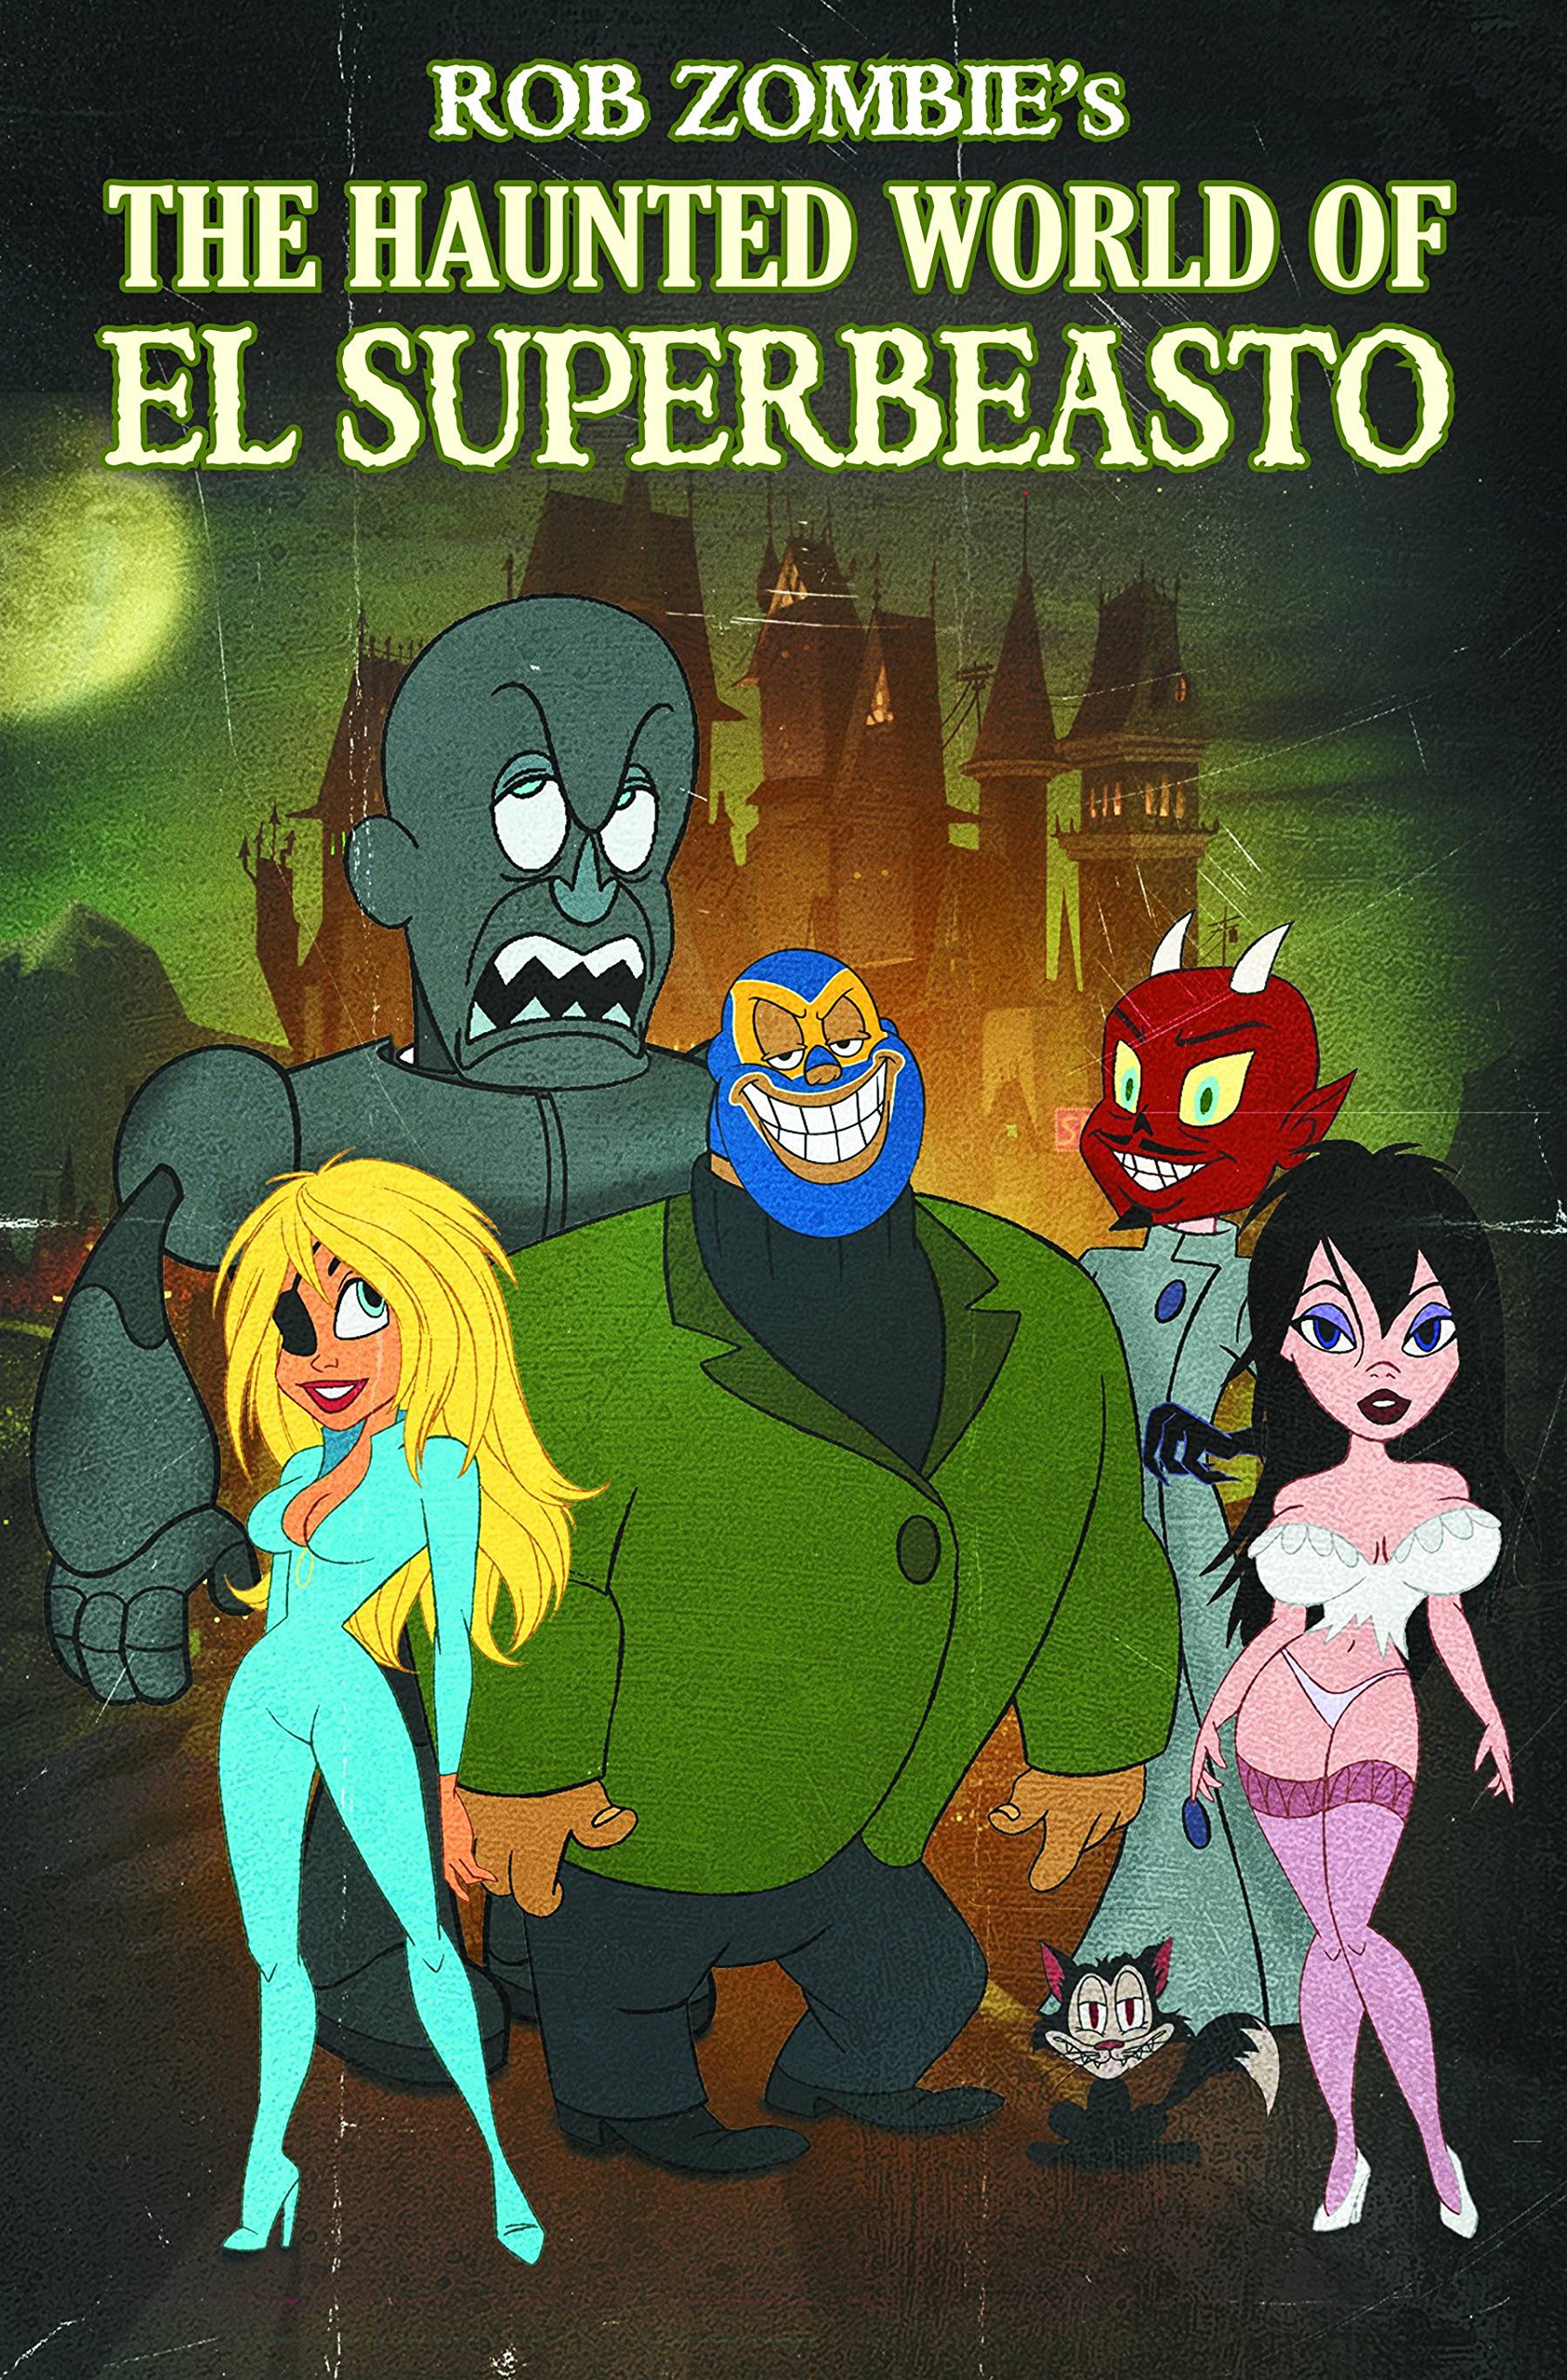 The haunted world of El Superbeasto [Sub-ITA] (2009)